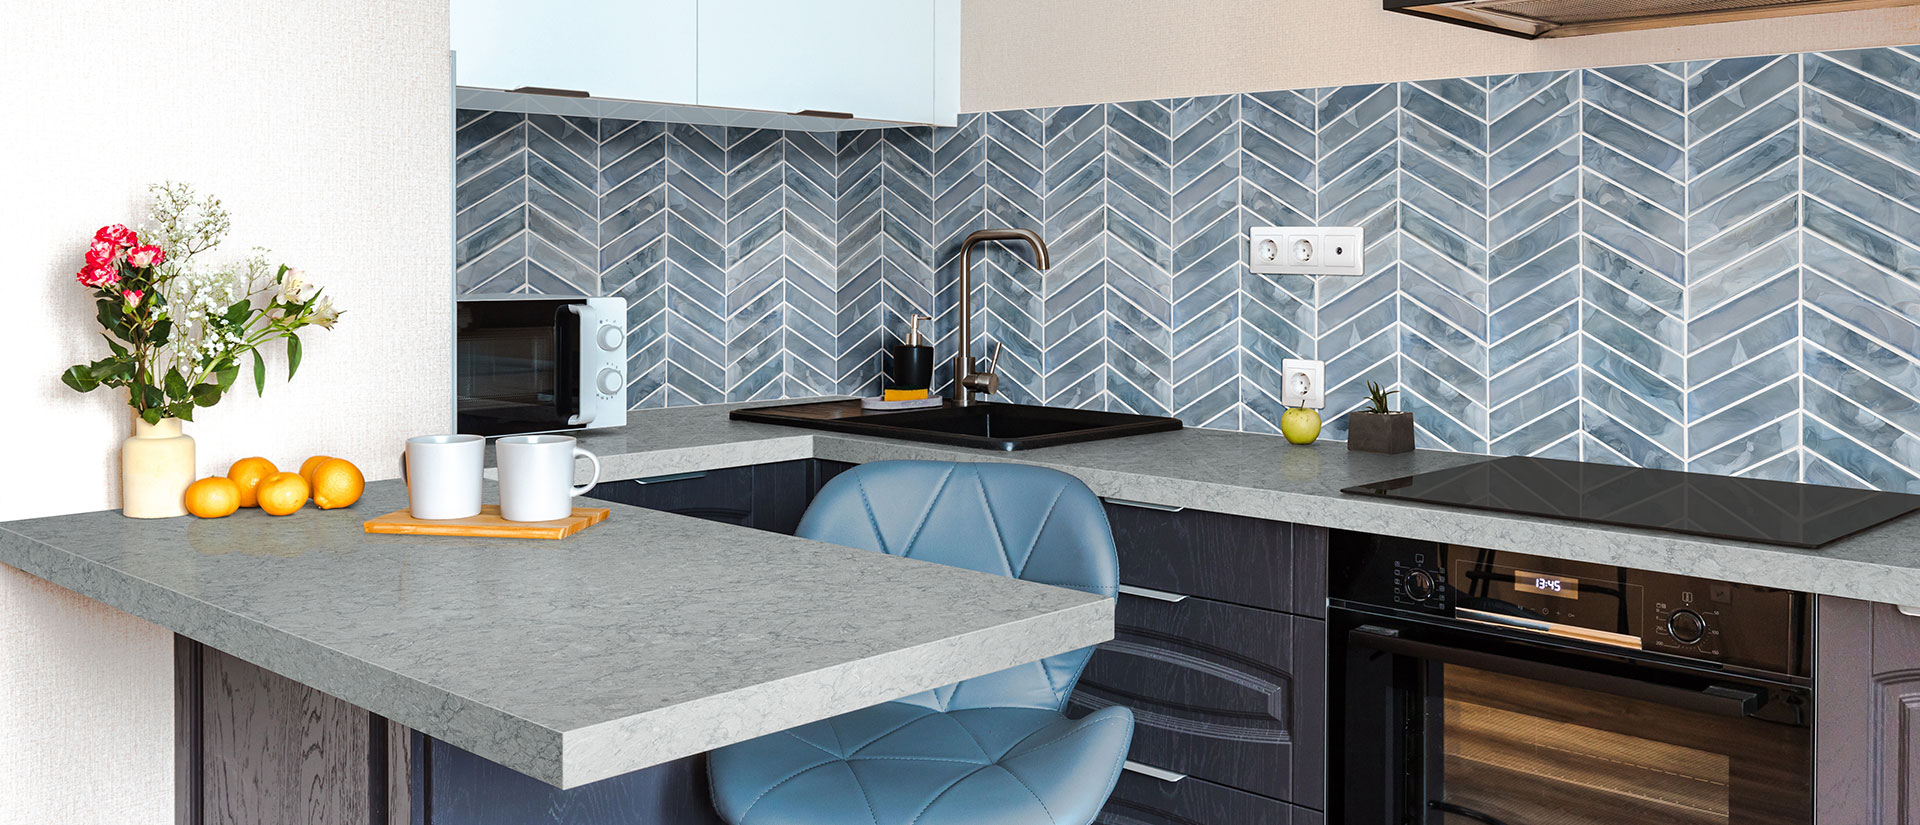 Galant Gray Quartz countertop in a modern and minimalist kitchen